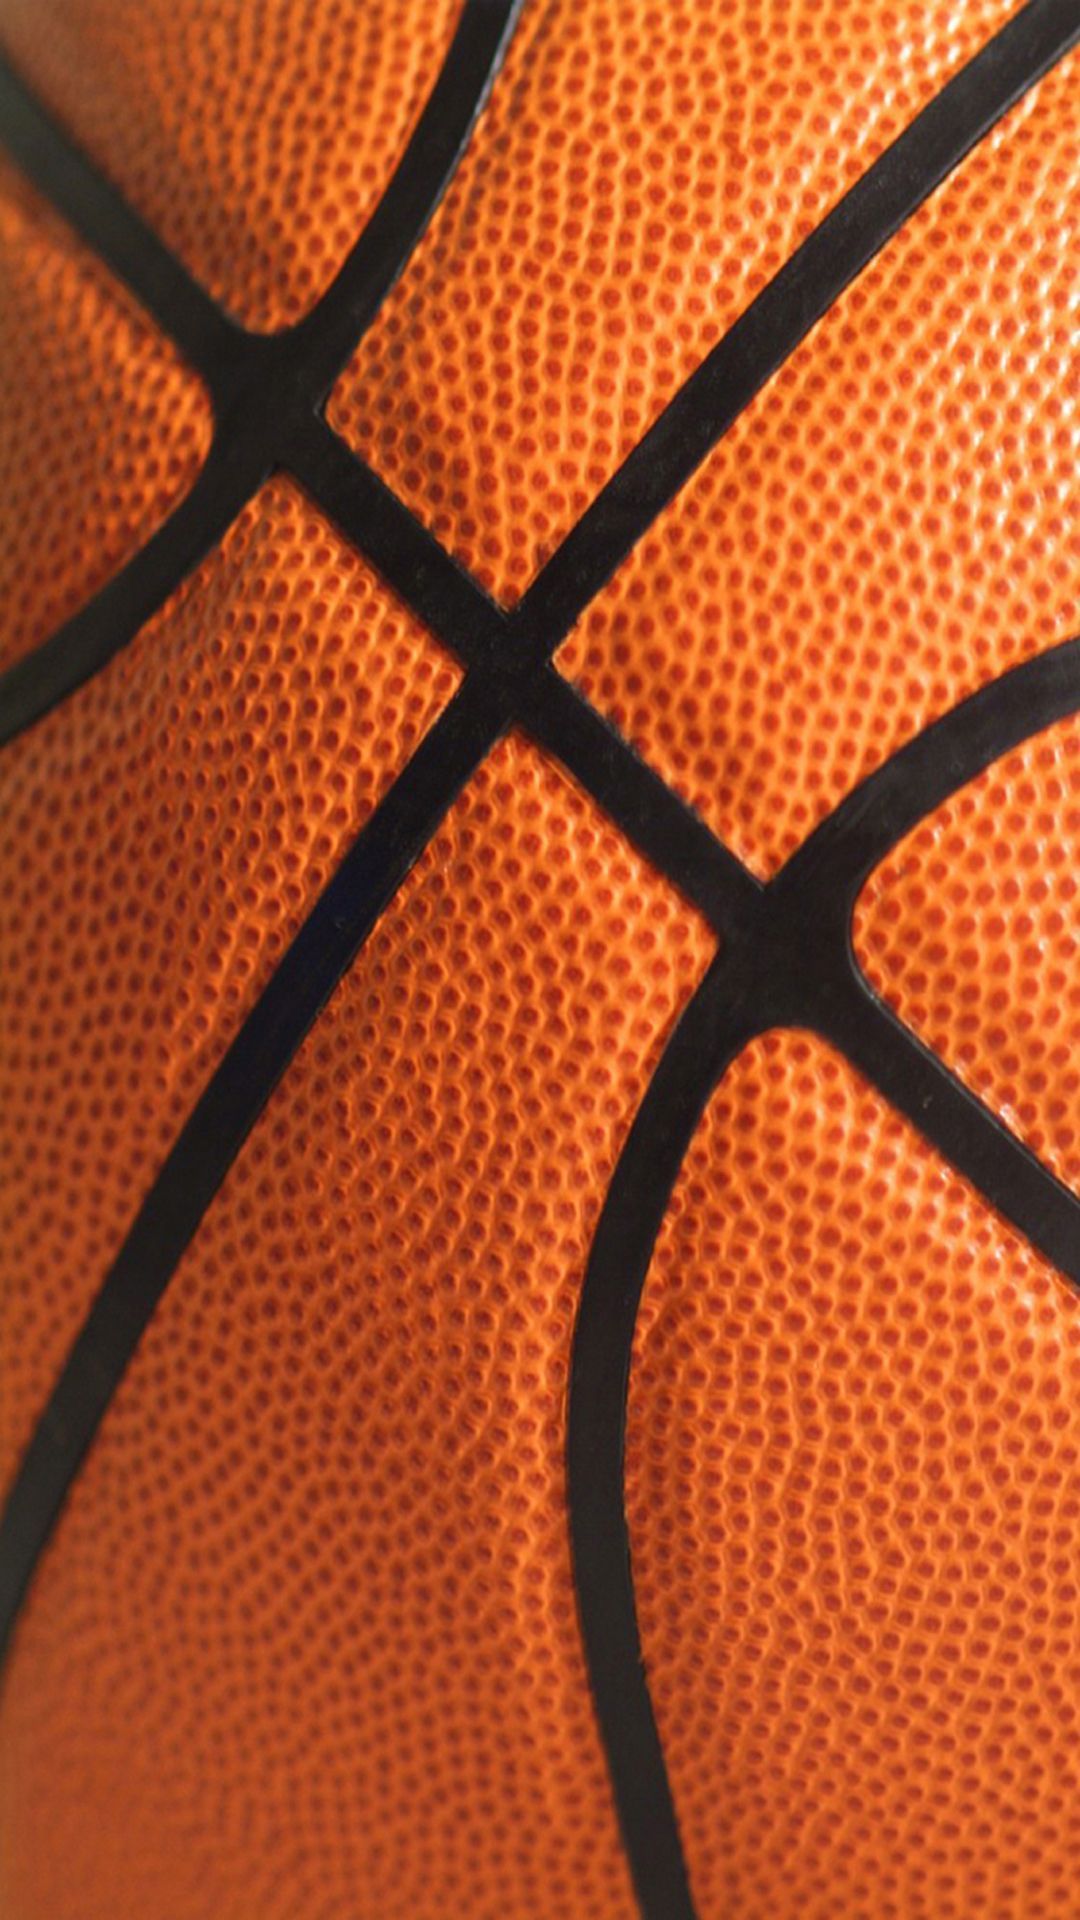 Basketball Galaxy S4 Wallpaper (1080x1920)